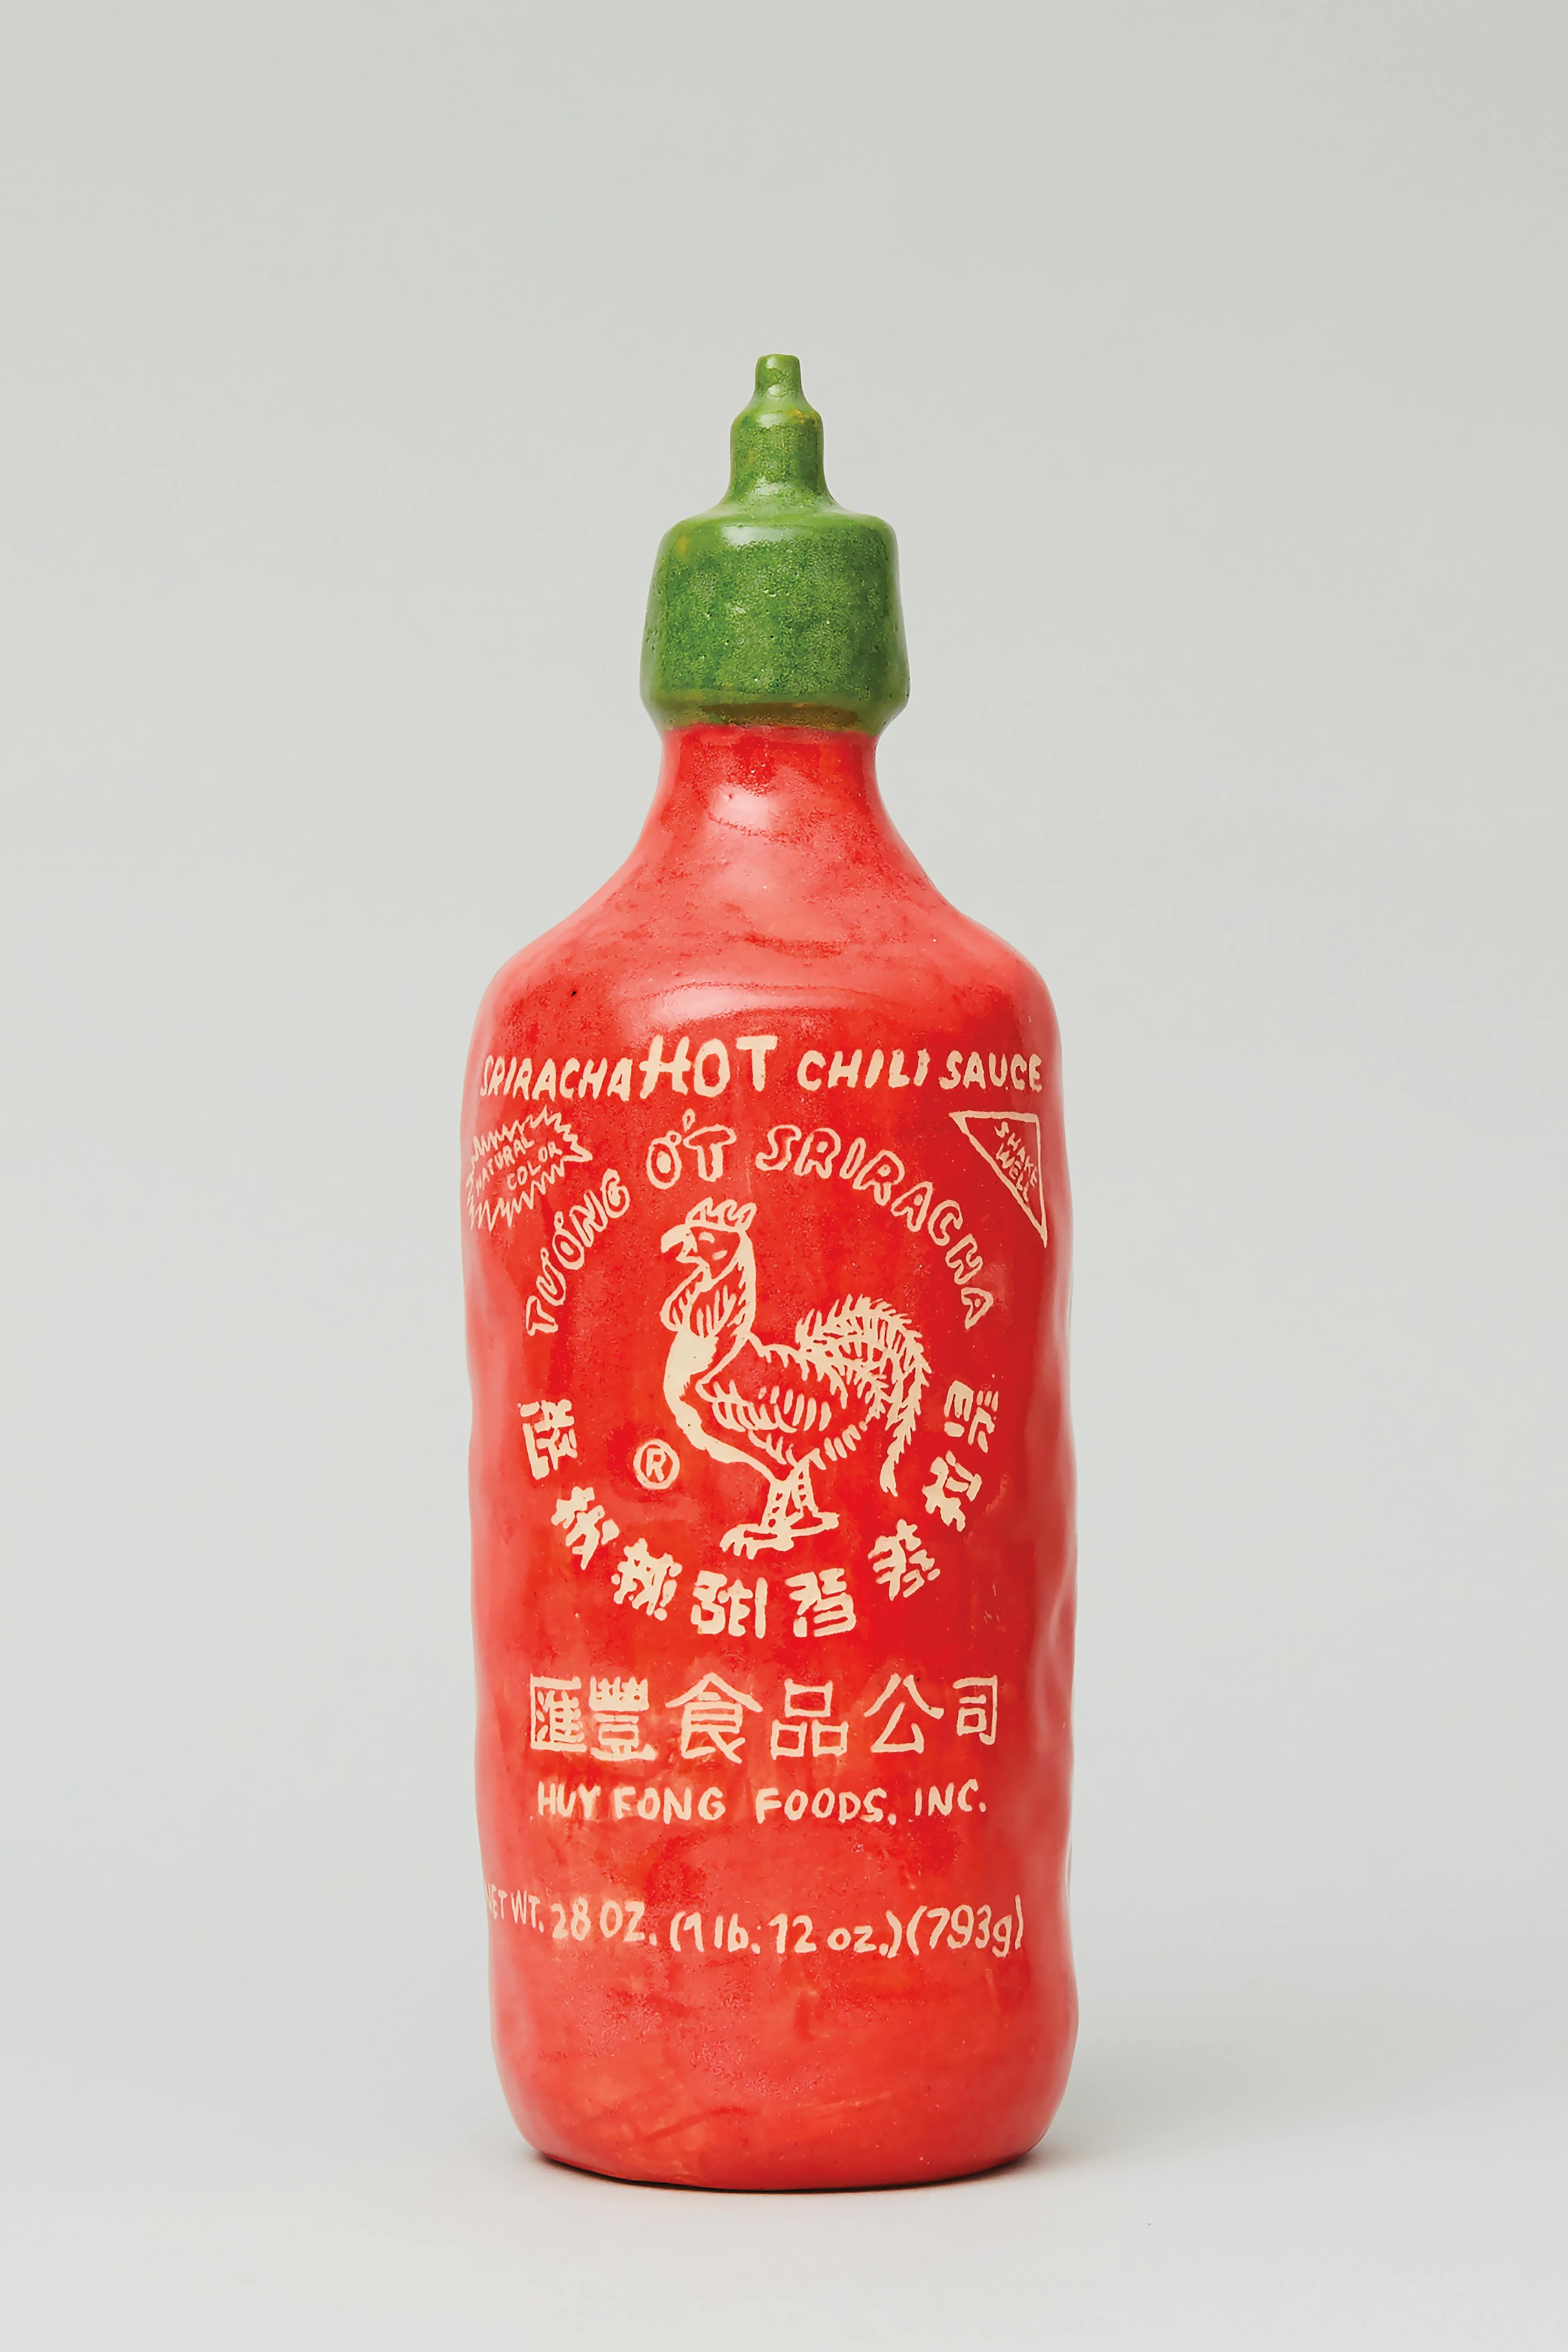 Ceramic replica of Huy Fong Foods Sriracha